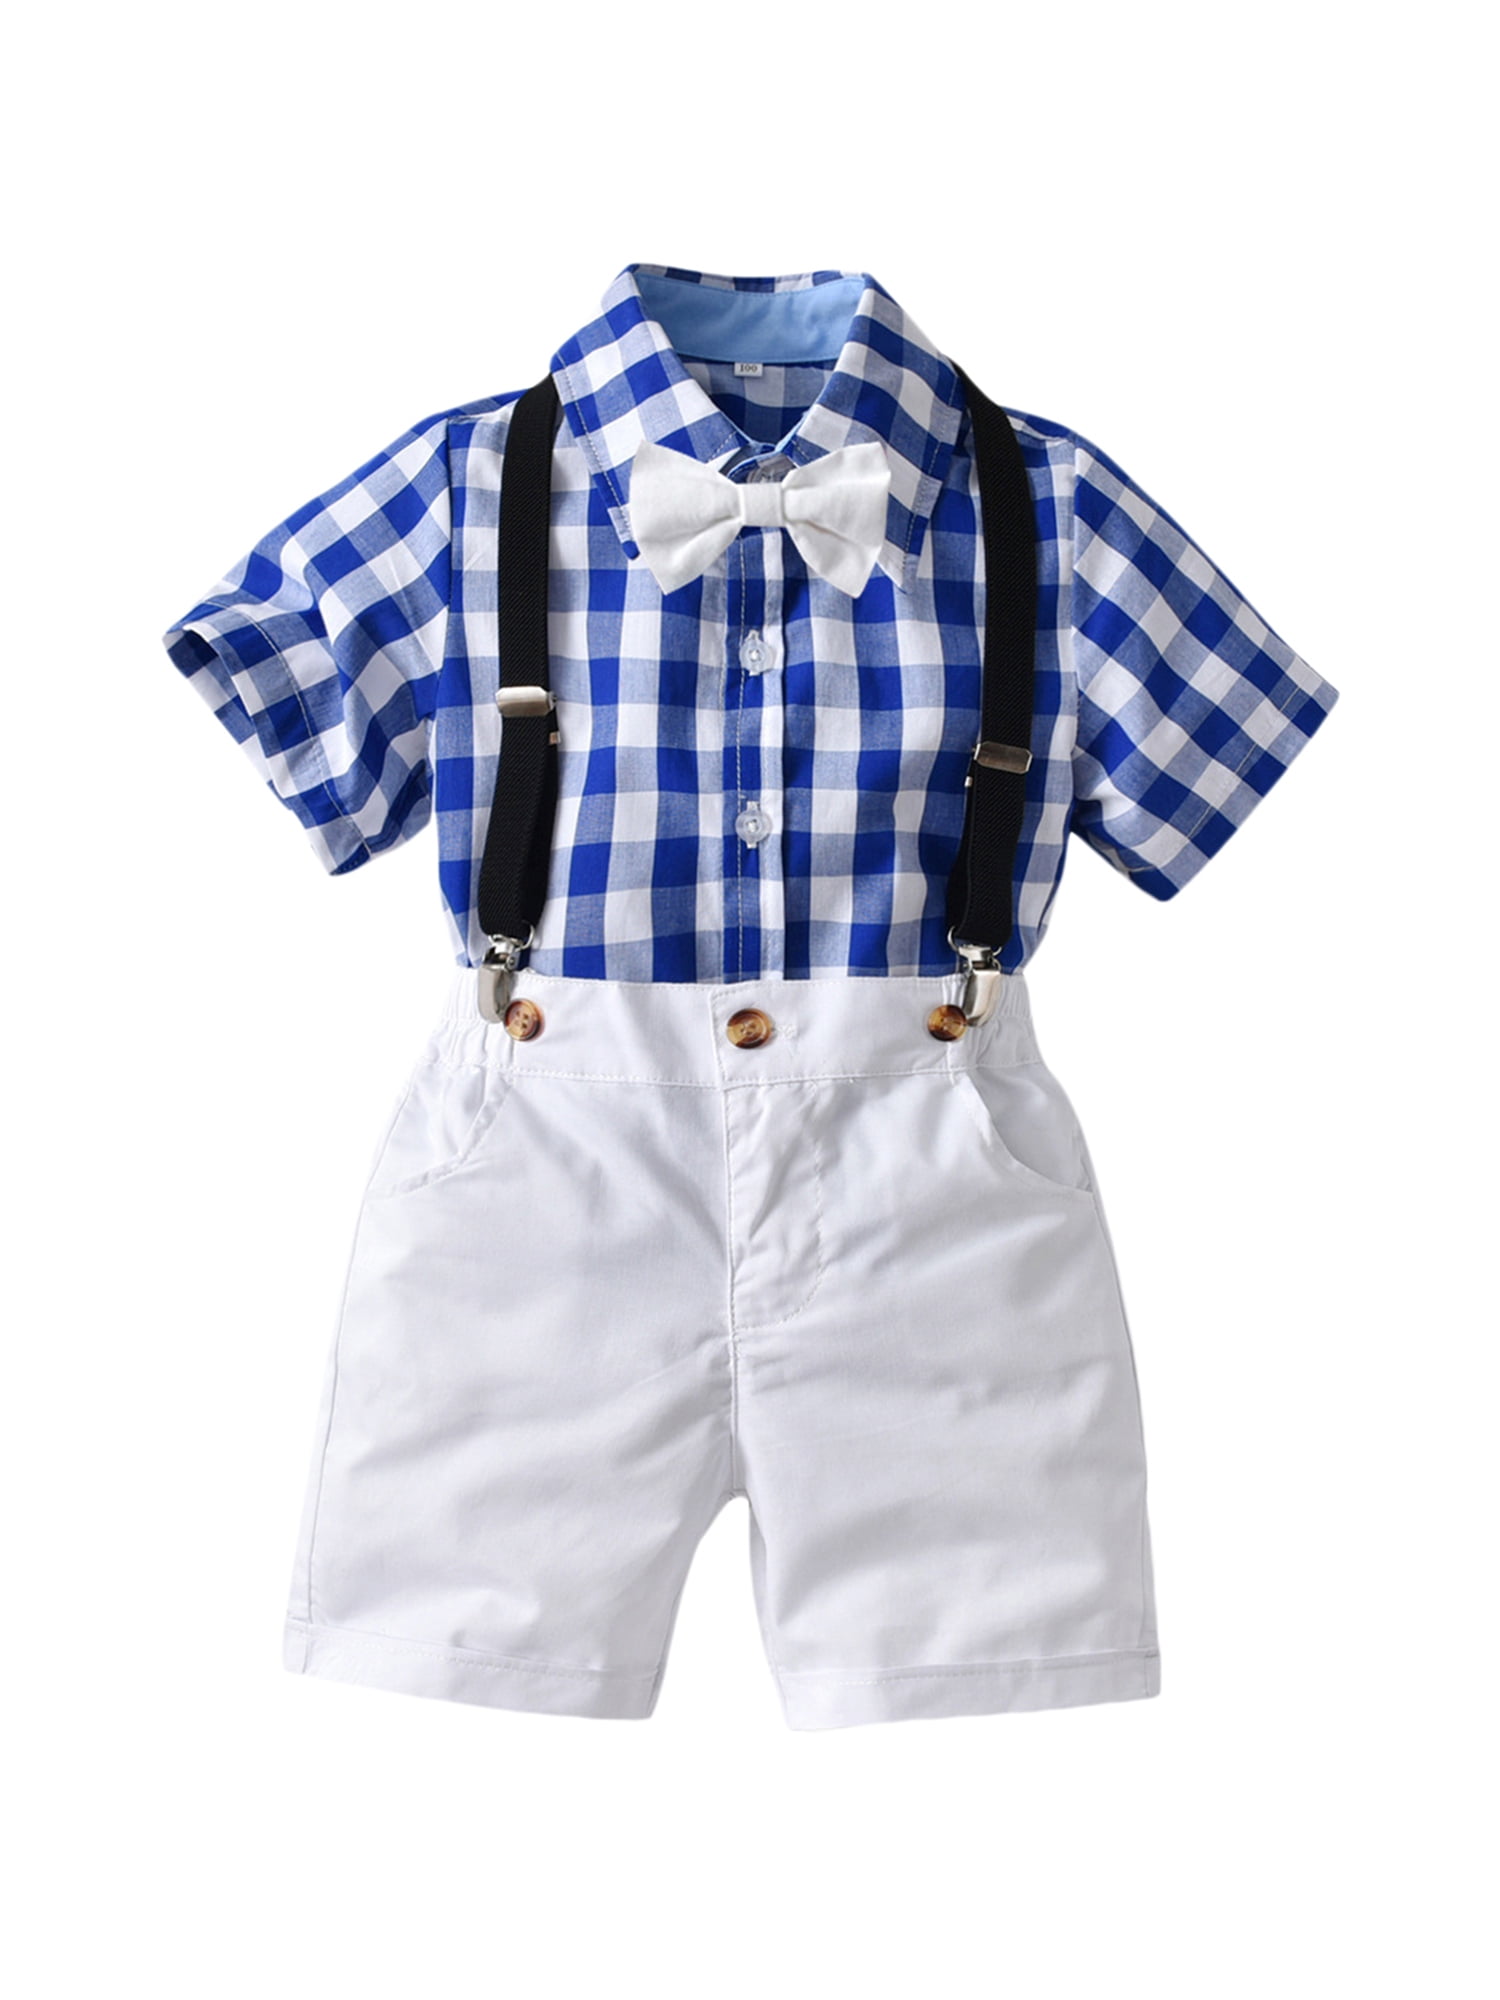 Toddler Baby Boys Summer Gentleman Bowtie Short Sleeve Shirt+Suspenders Shorts 